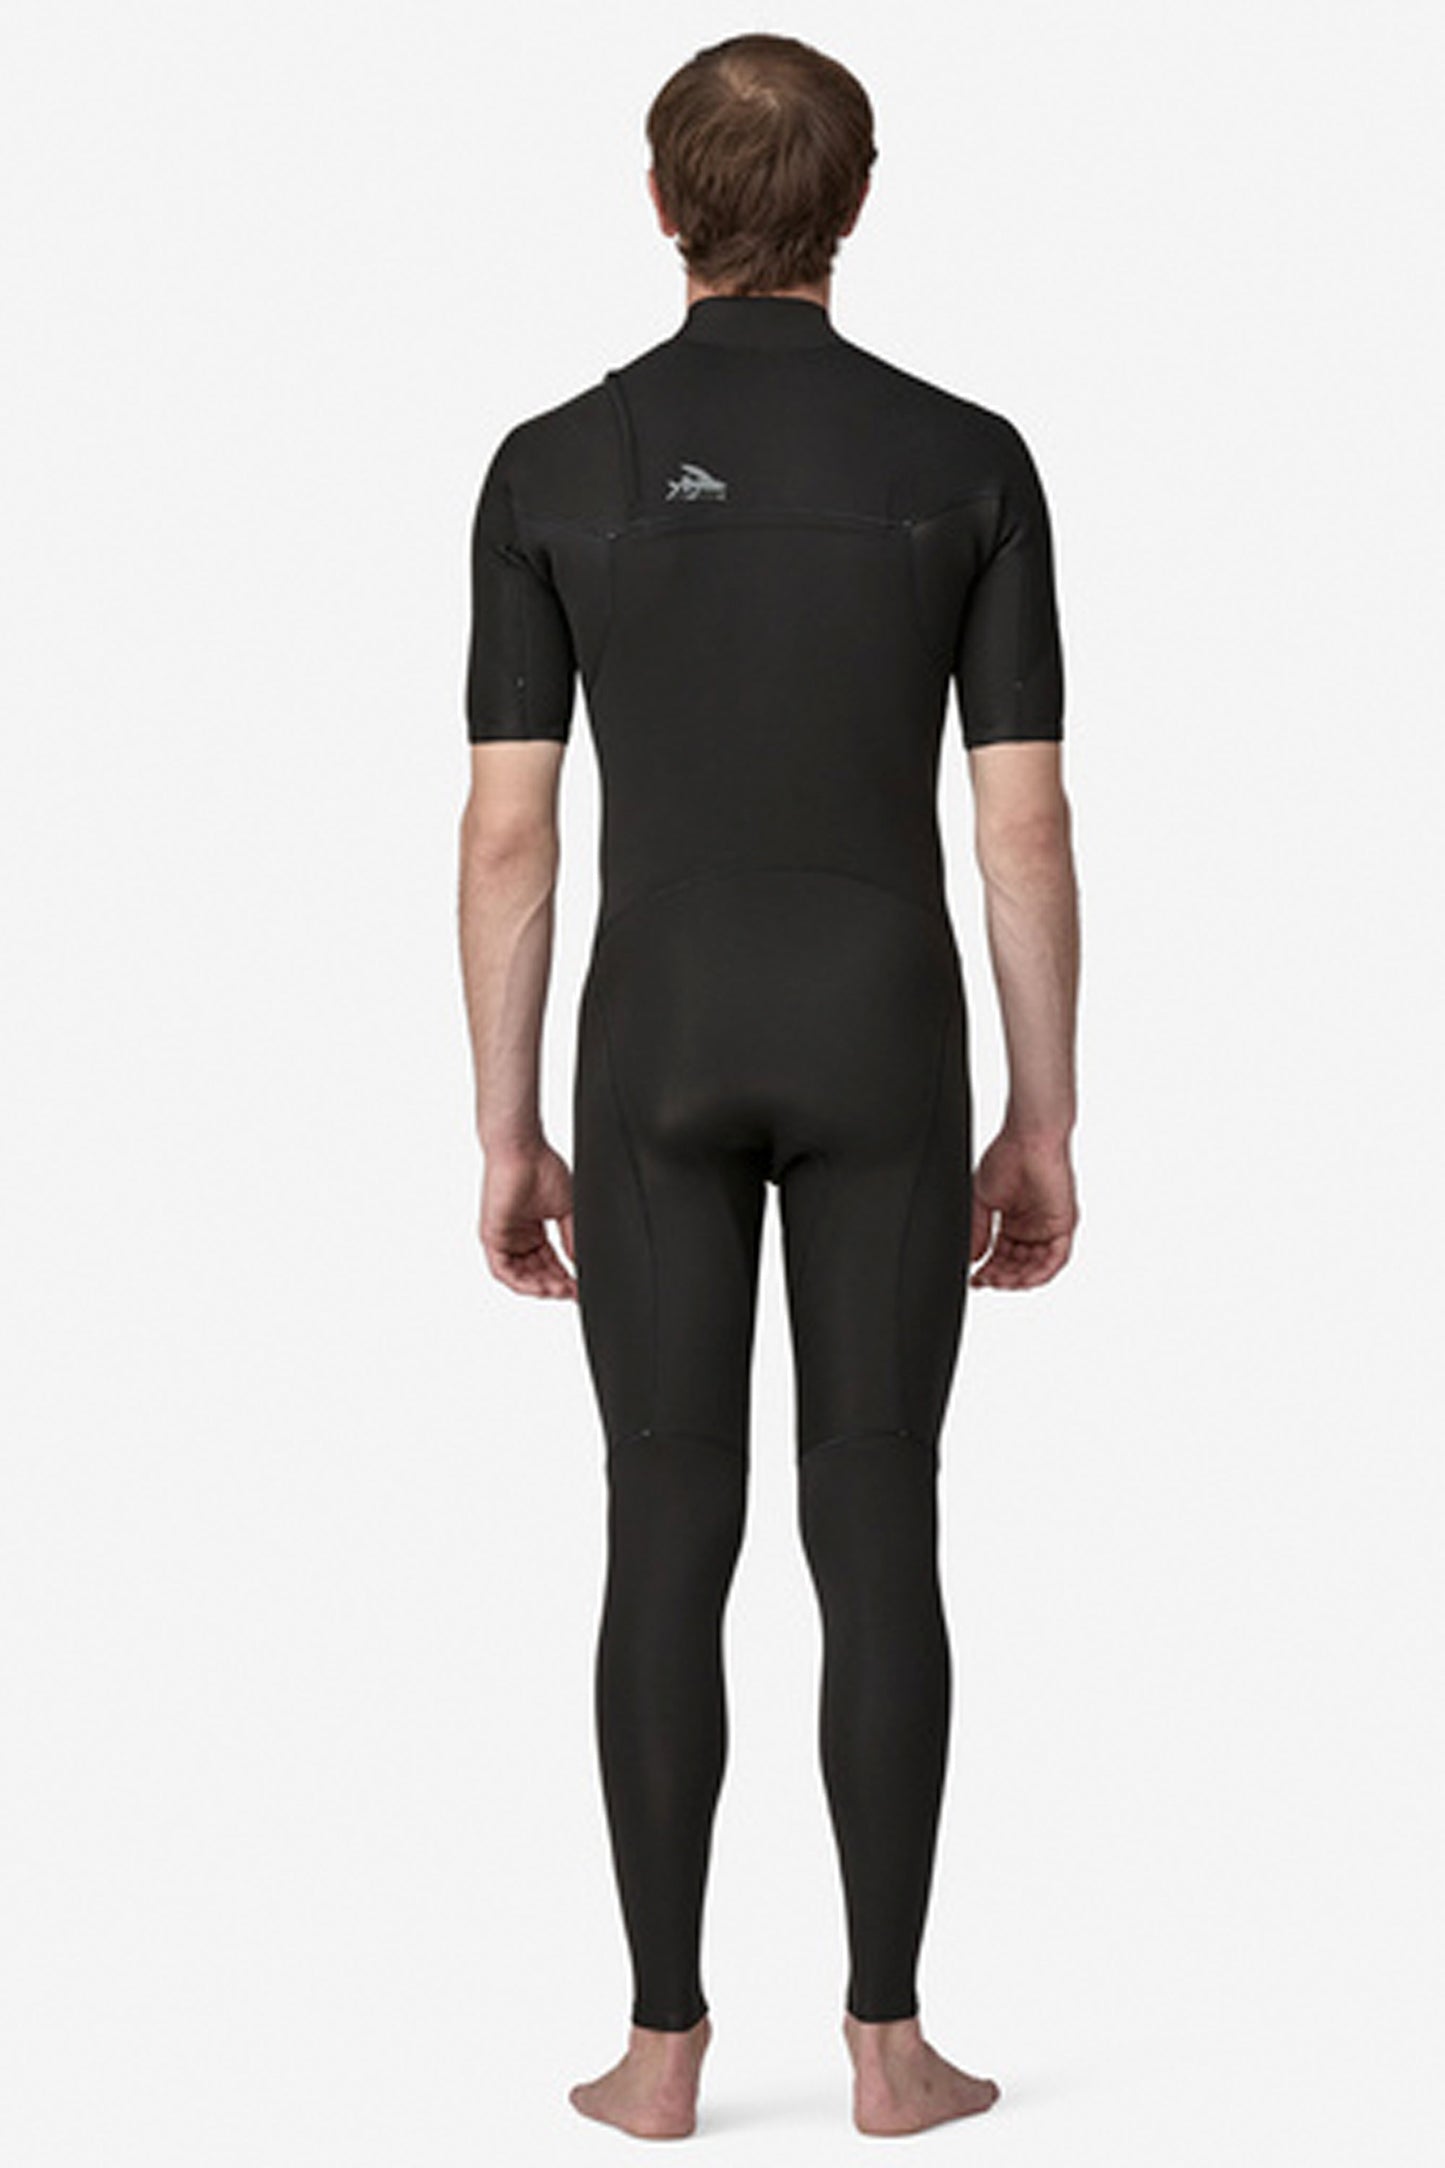 Pukas-surf-shop-patagonia-man-wetsuit-Men_s-Yulex-Regulator-Lite-Front-Zip-Short-Sleeved-Full-Wetsuit